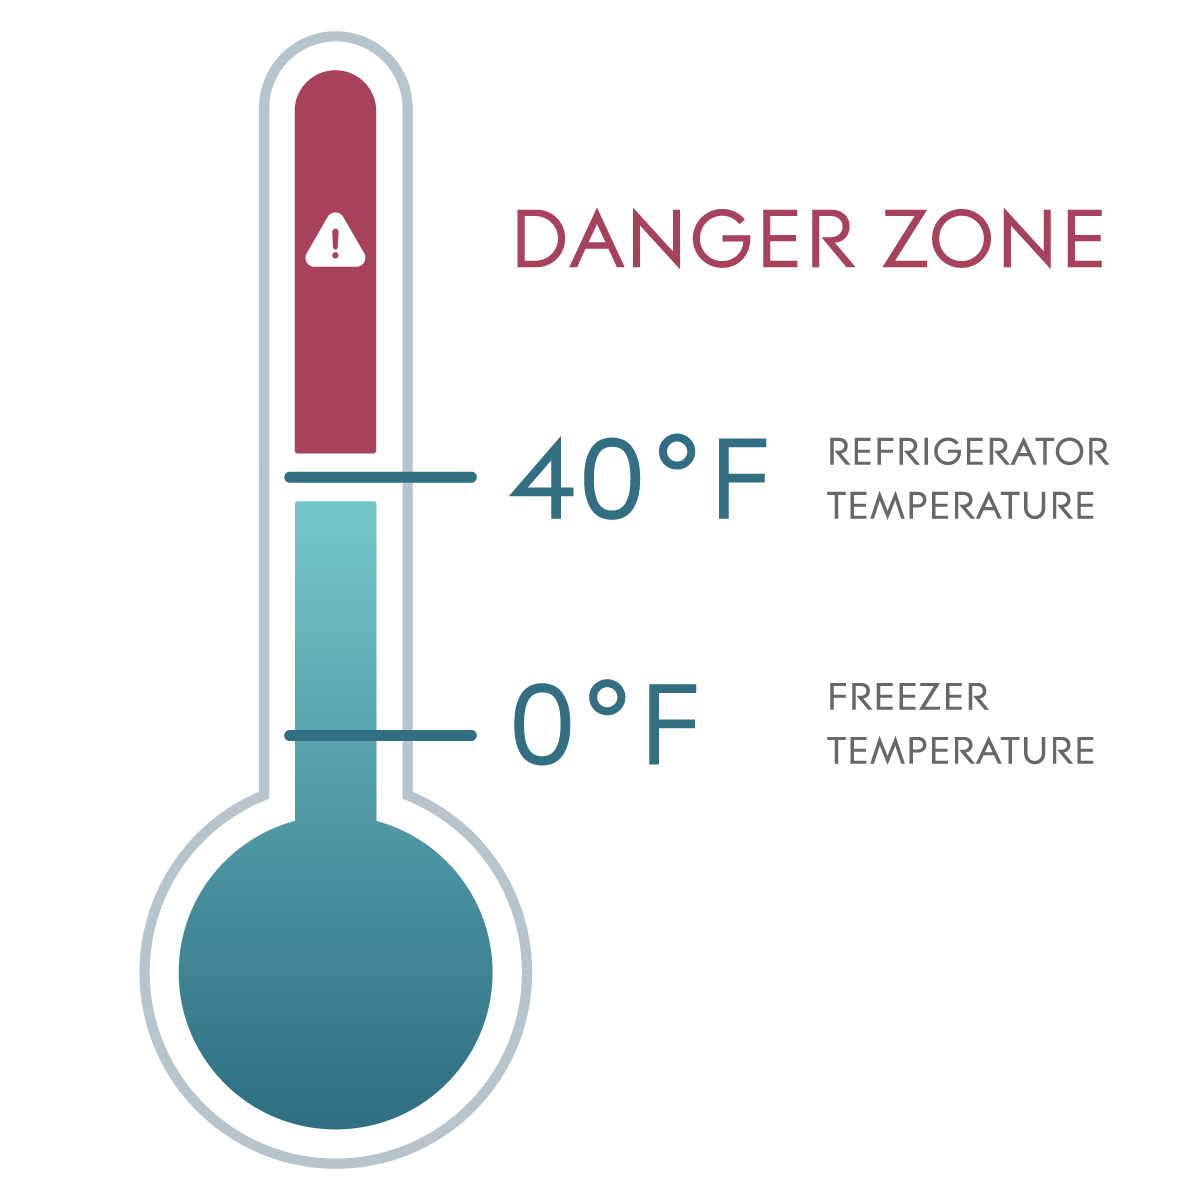 Temperature loggers can prevent temperature excursions